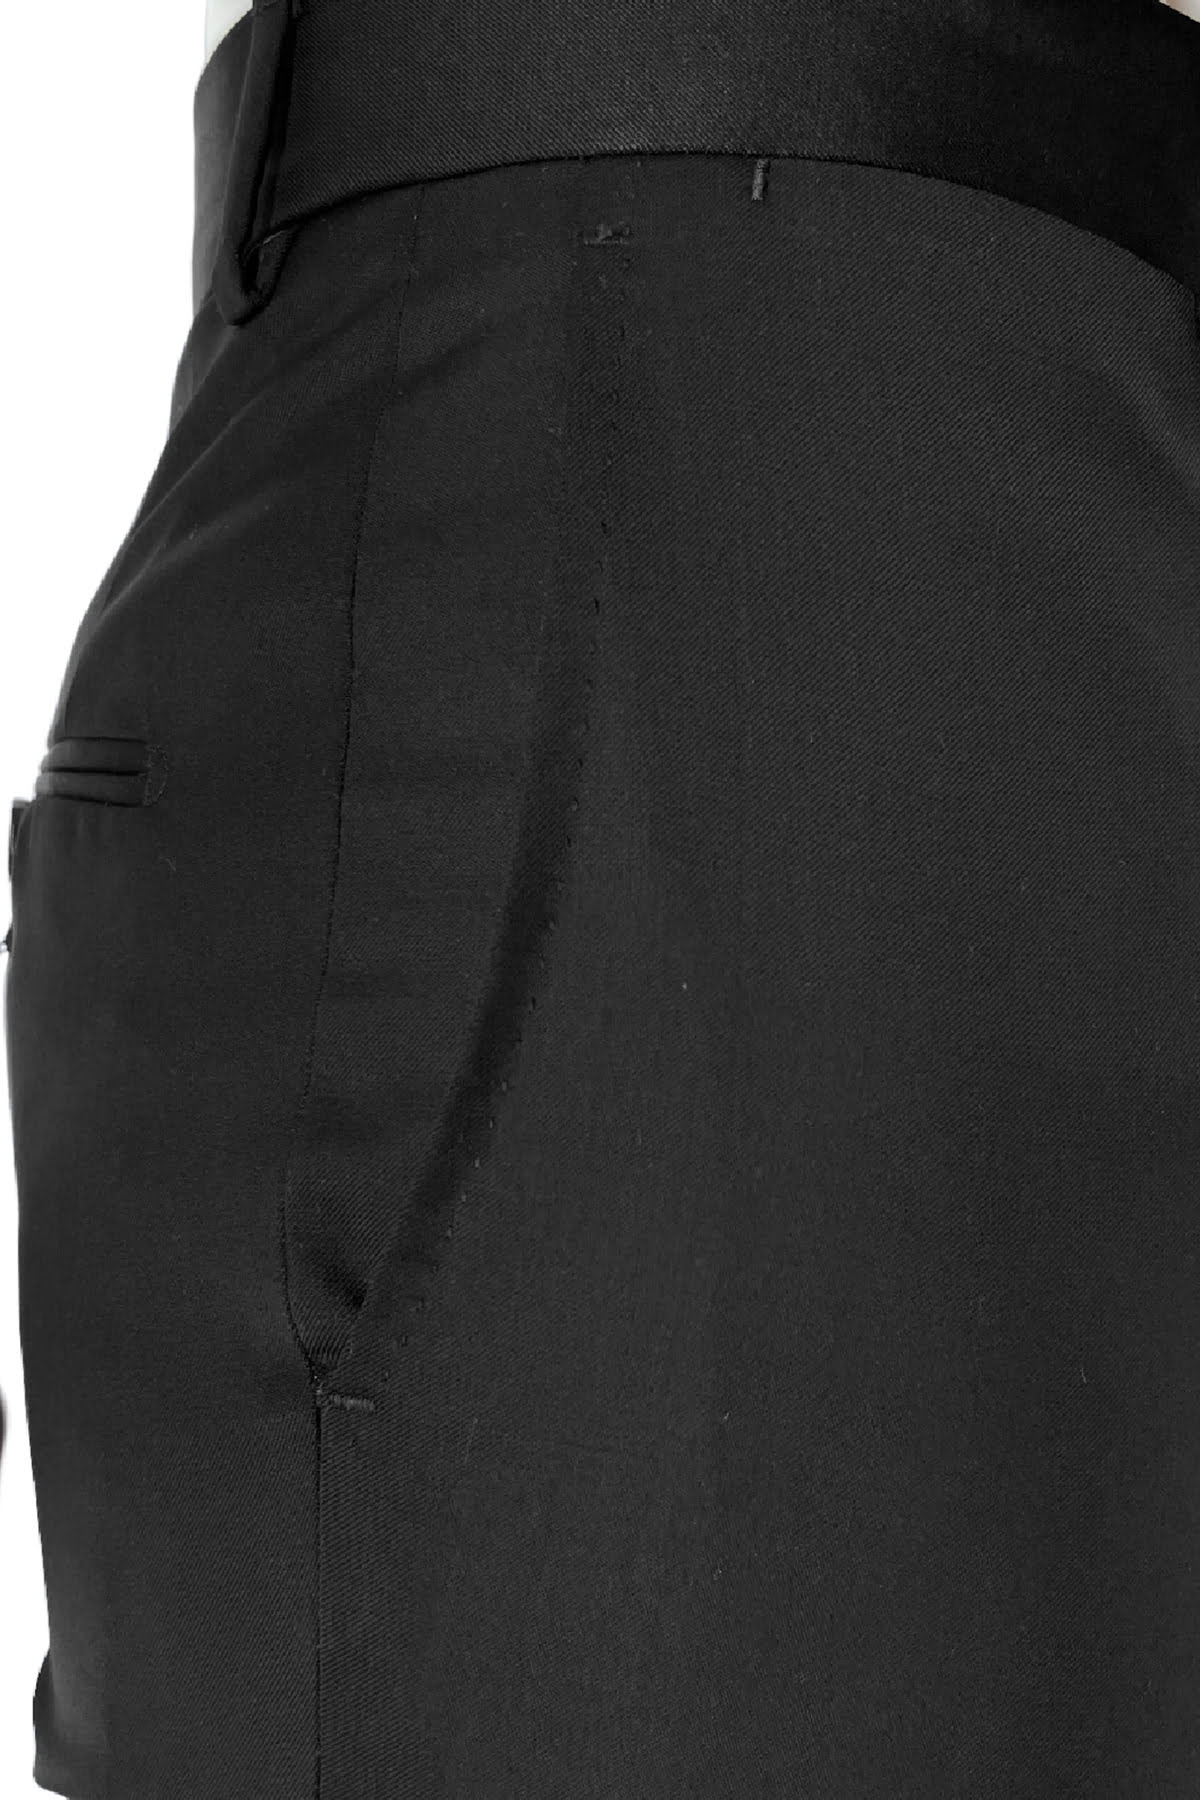 Pantalone uomo nero tasca america in fresco lana 100% Vitale Barberis Canonico